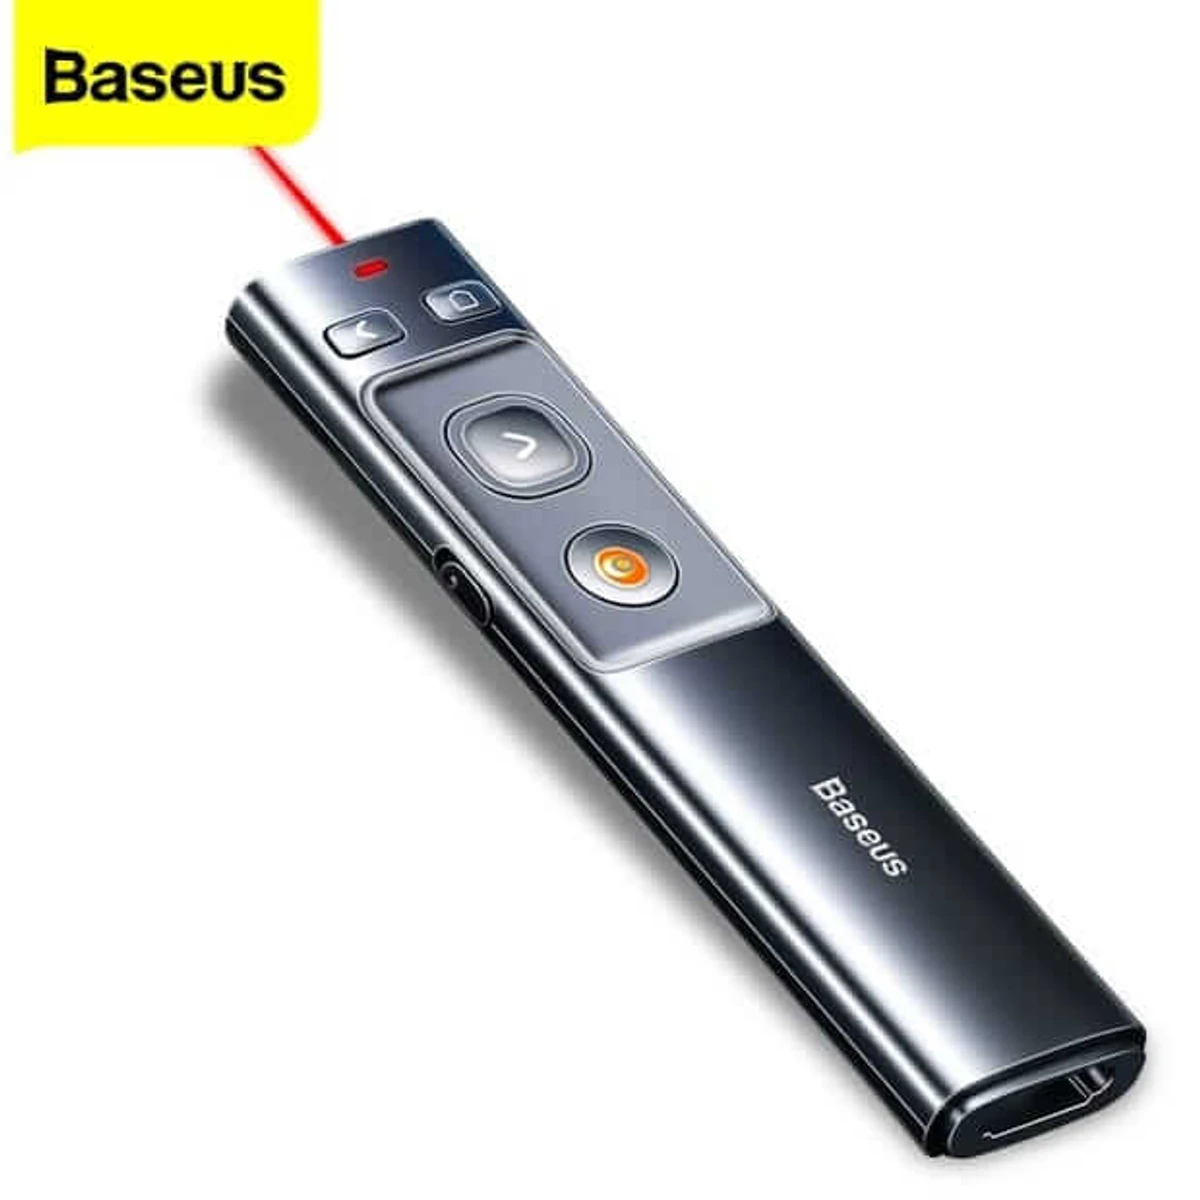 Baseus Orange Dot Wireless Presenter